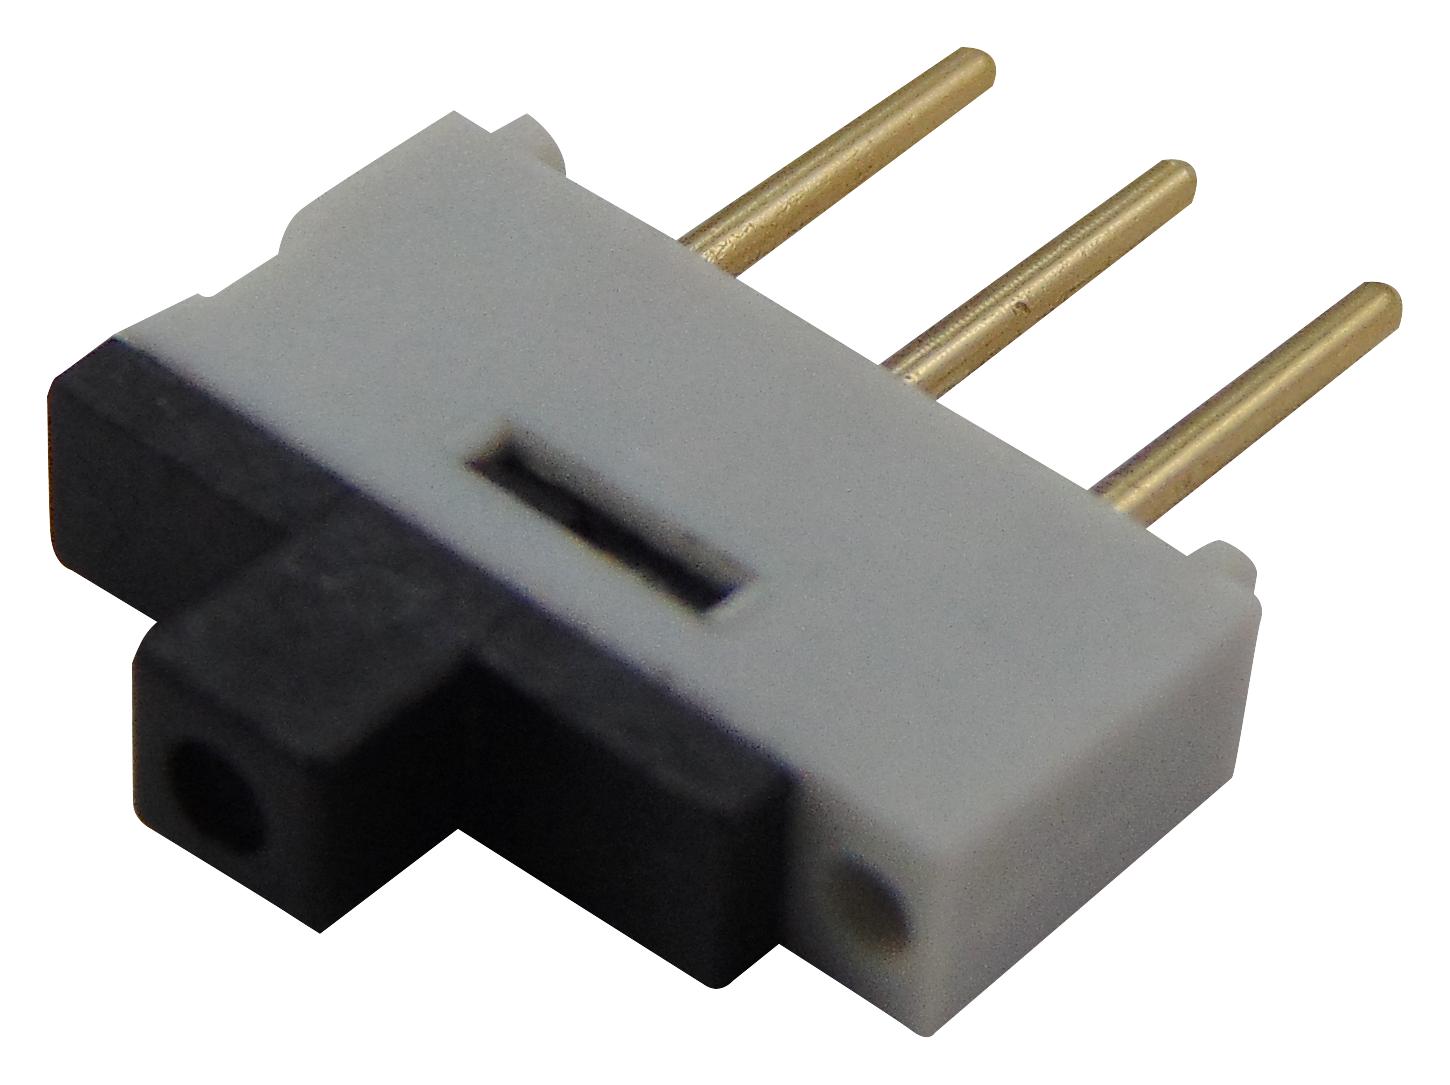 Eoz 09-03290.01 Switch, Spdt-Co, 0.5A, 12V, Pcb, Black